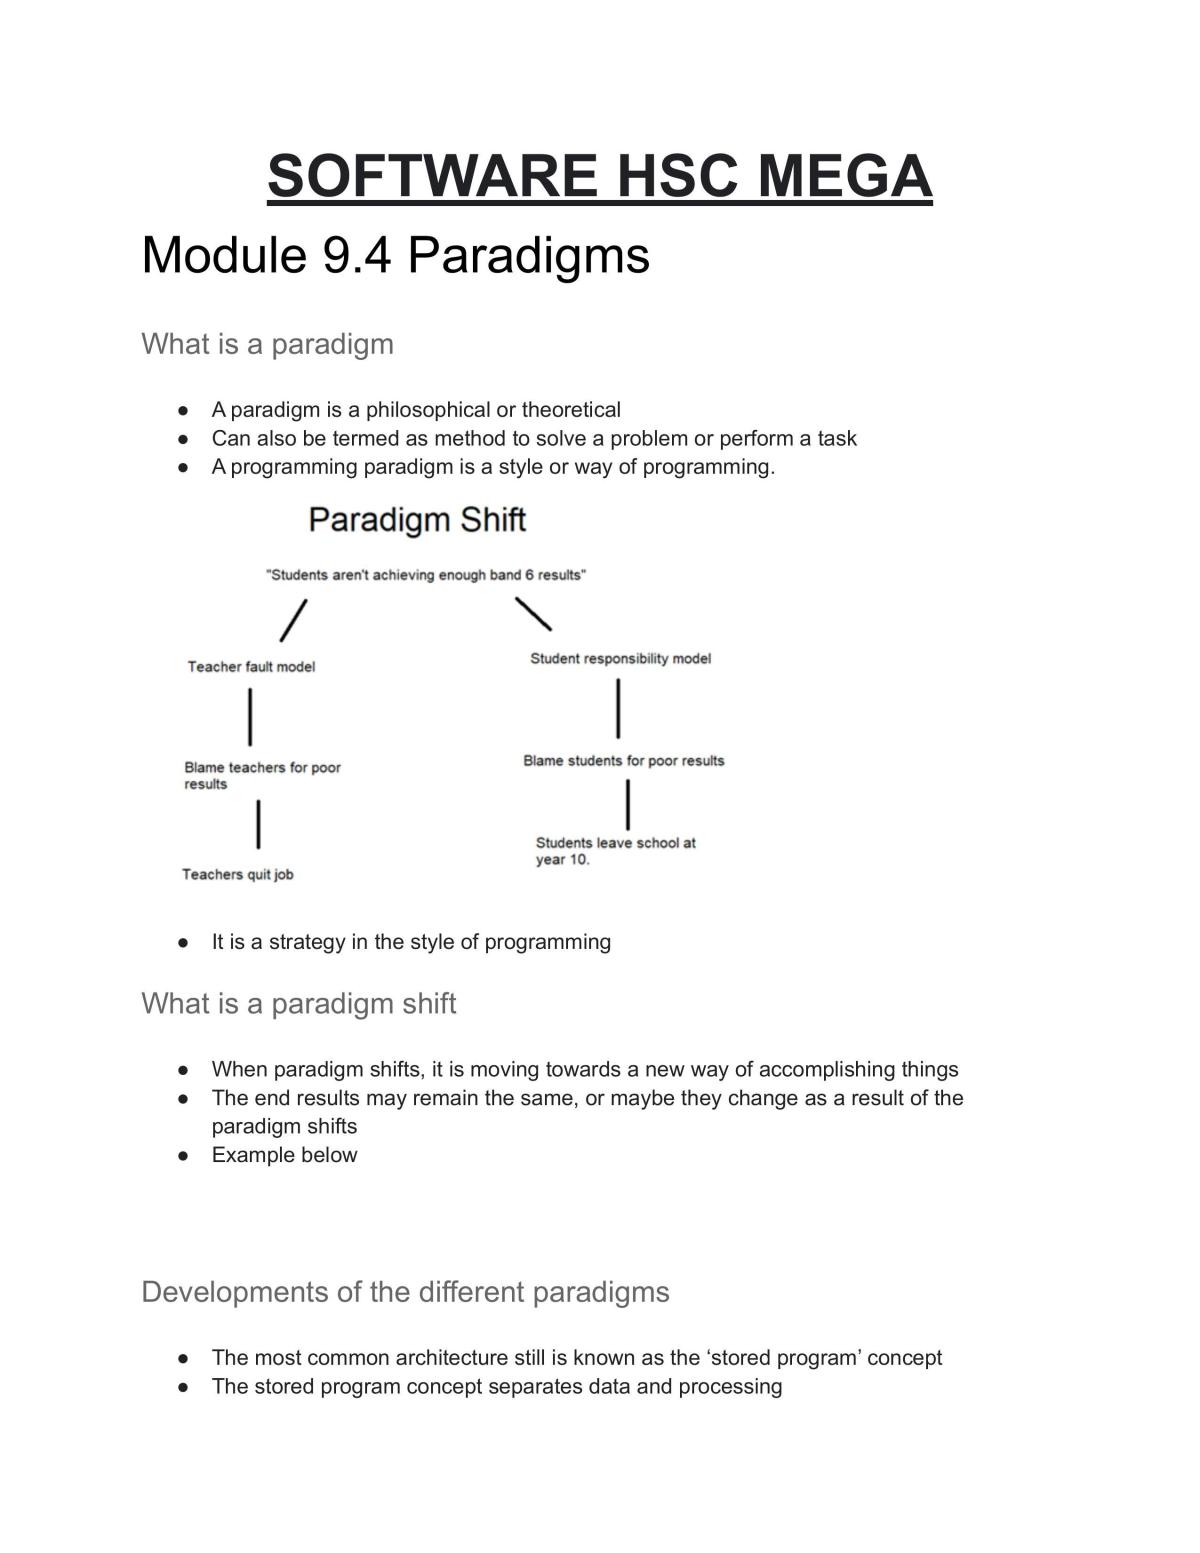 Software HSC MEGA complete notes - Page 1